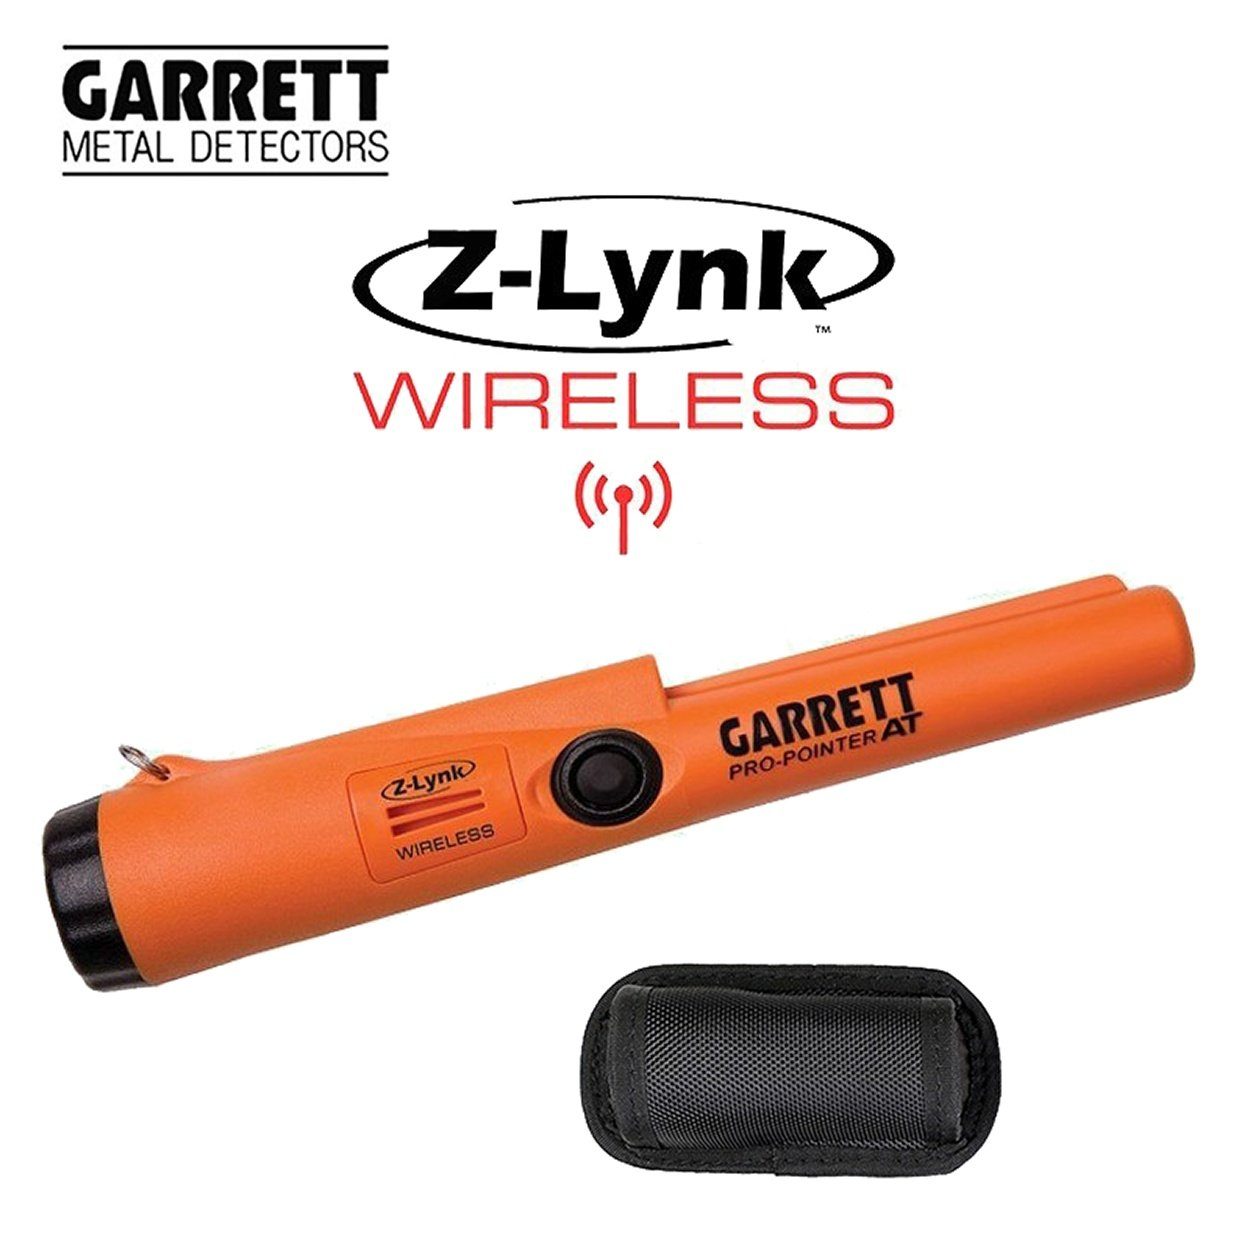 Garrett Metalldetektor Garrett Pro Pointer AT Z-Lynk wireless Pinpointer  wasserdicht